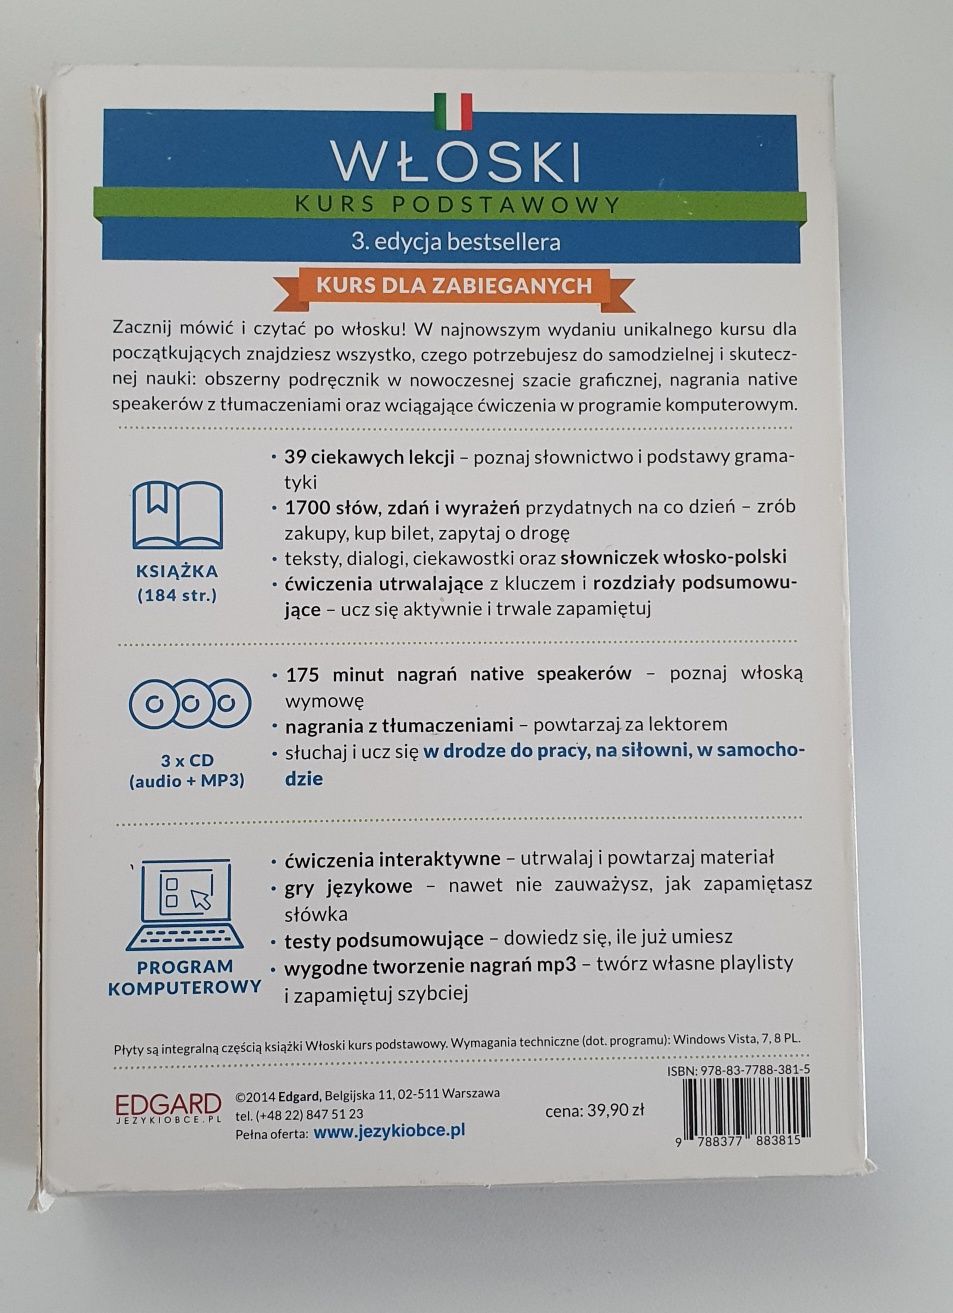 Włoski Kurs Podstawowy EDGARD
EDGARD
3 CD + książka + program komputer